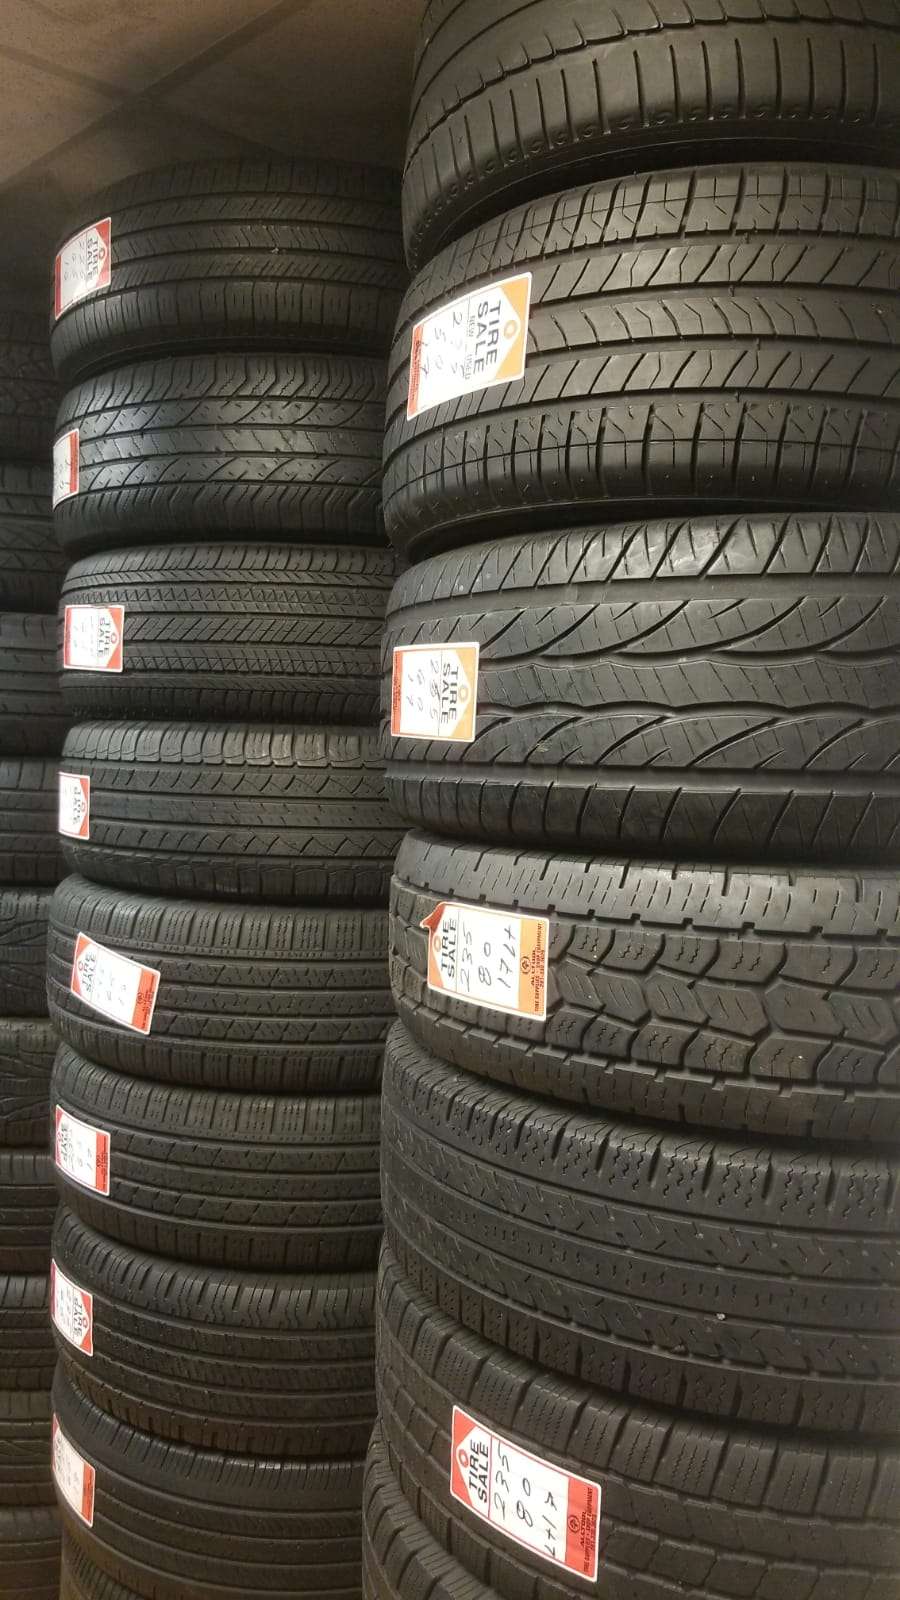 aml tire shop | 40 Maxey Rd, Houston, TX 77013, USA | Phone: (832) 298-0880